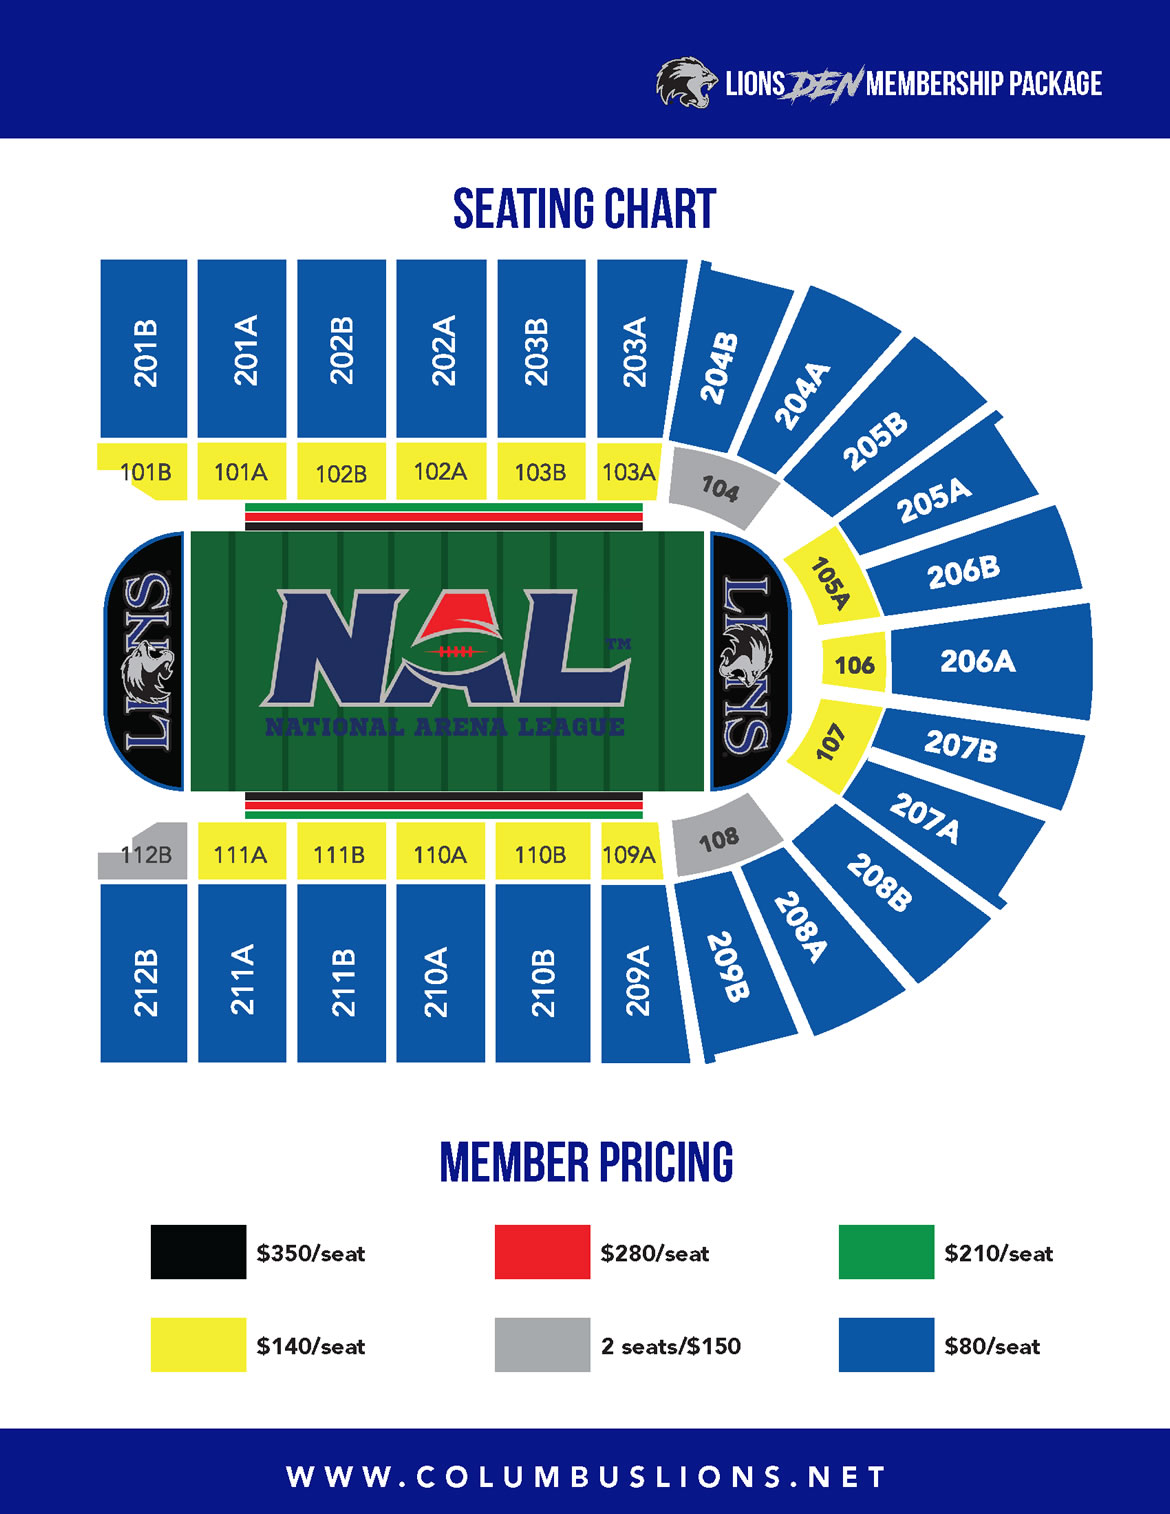 Columbus Lions: Seating Chart